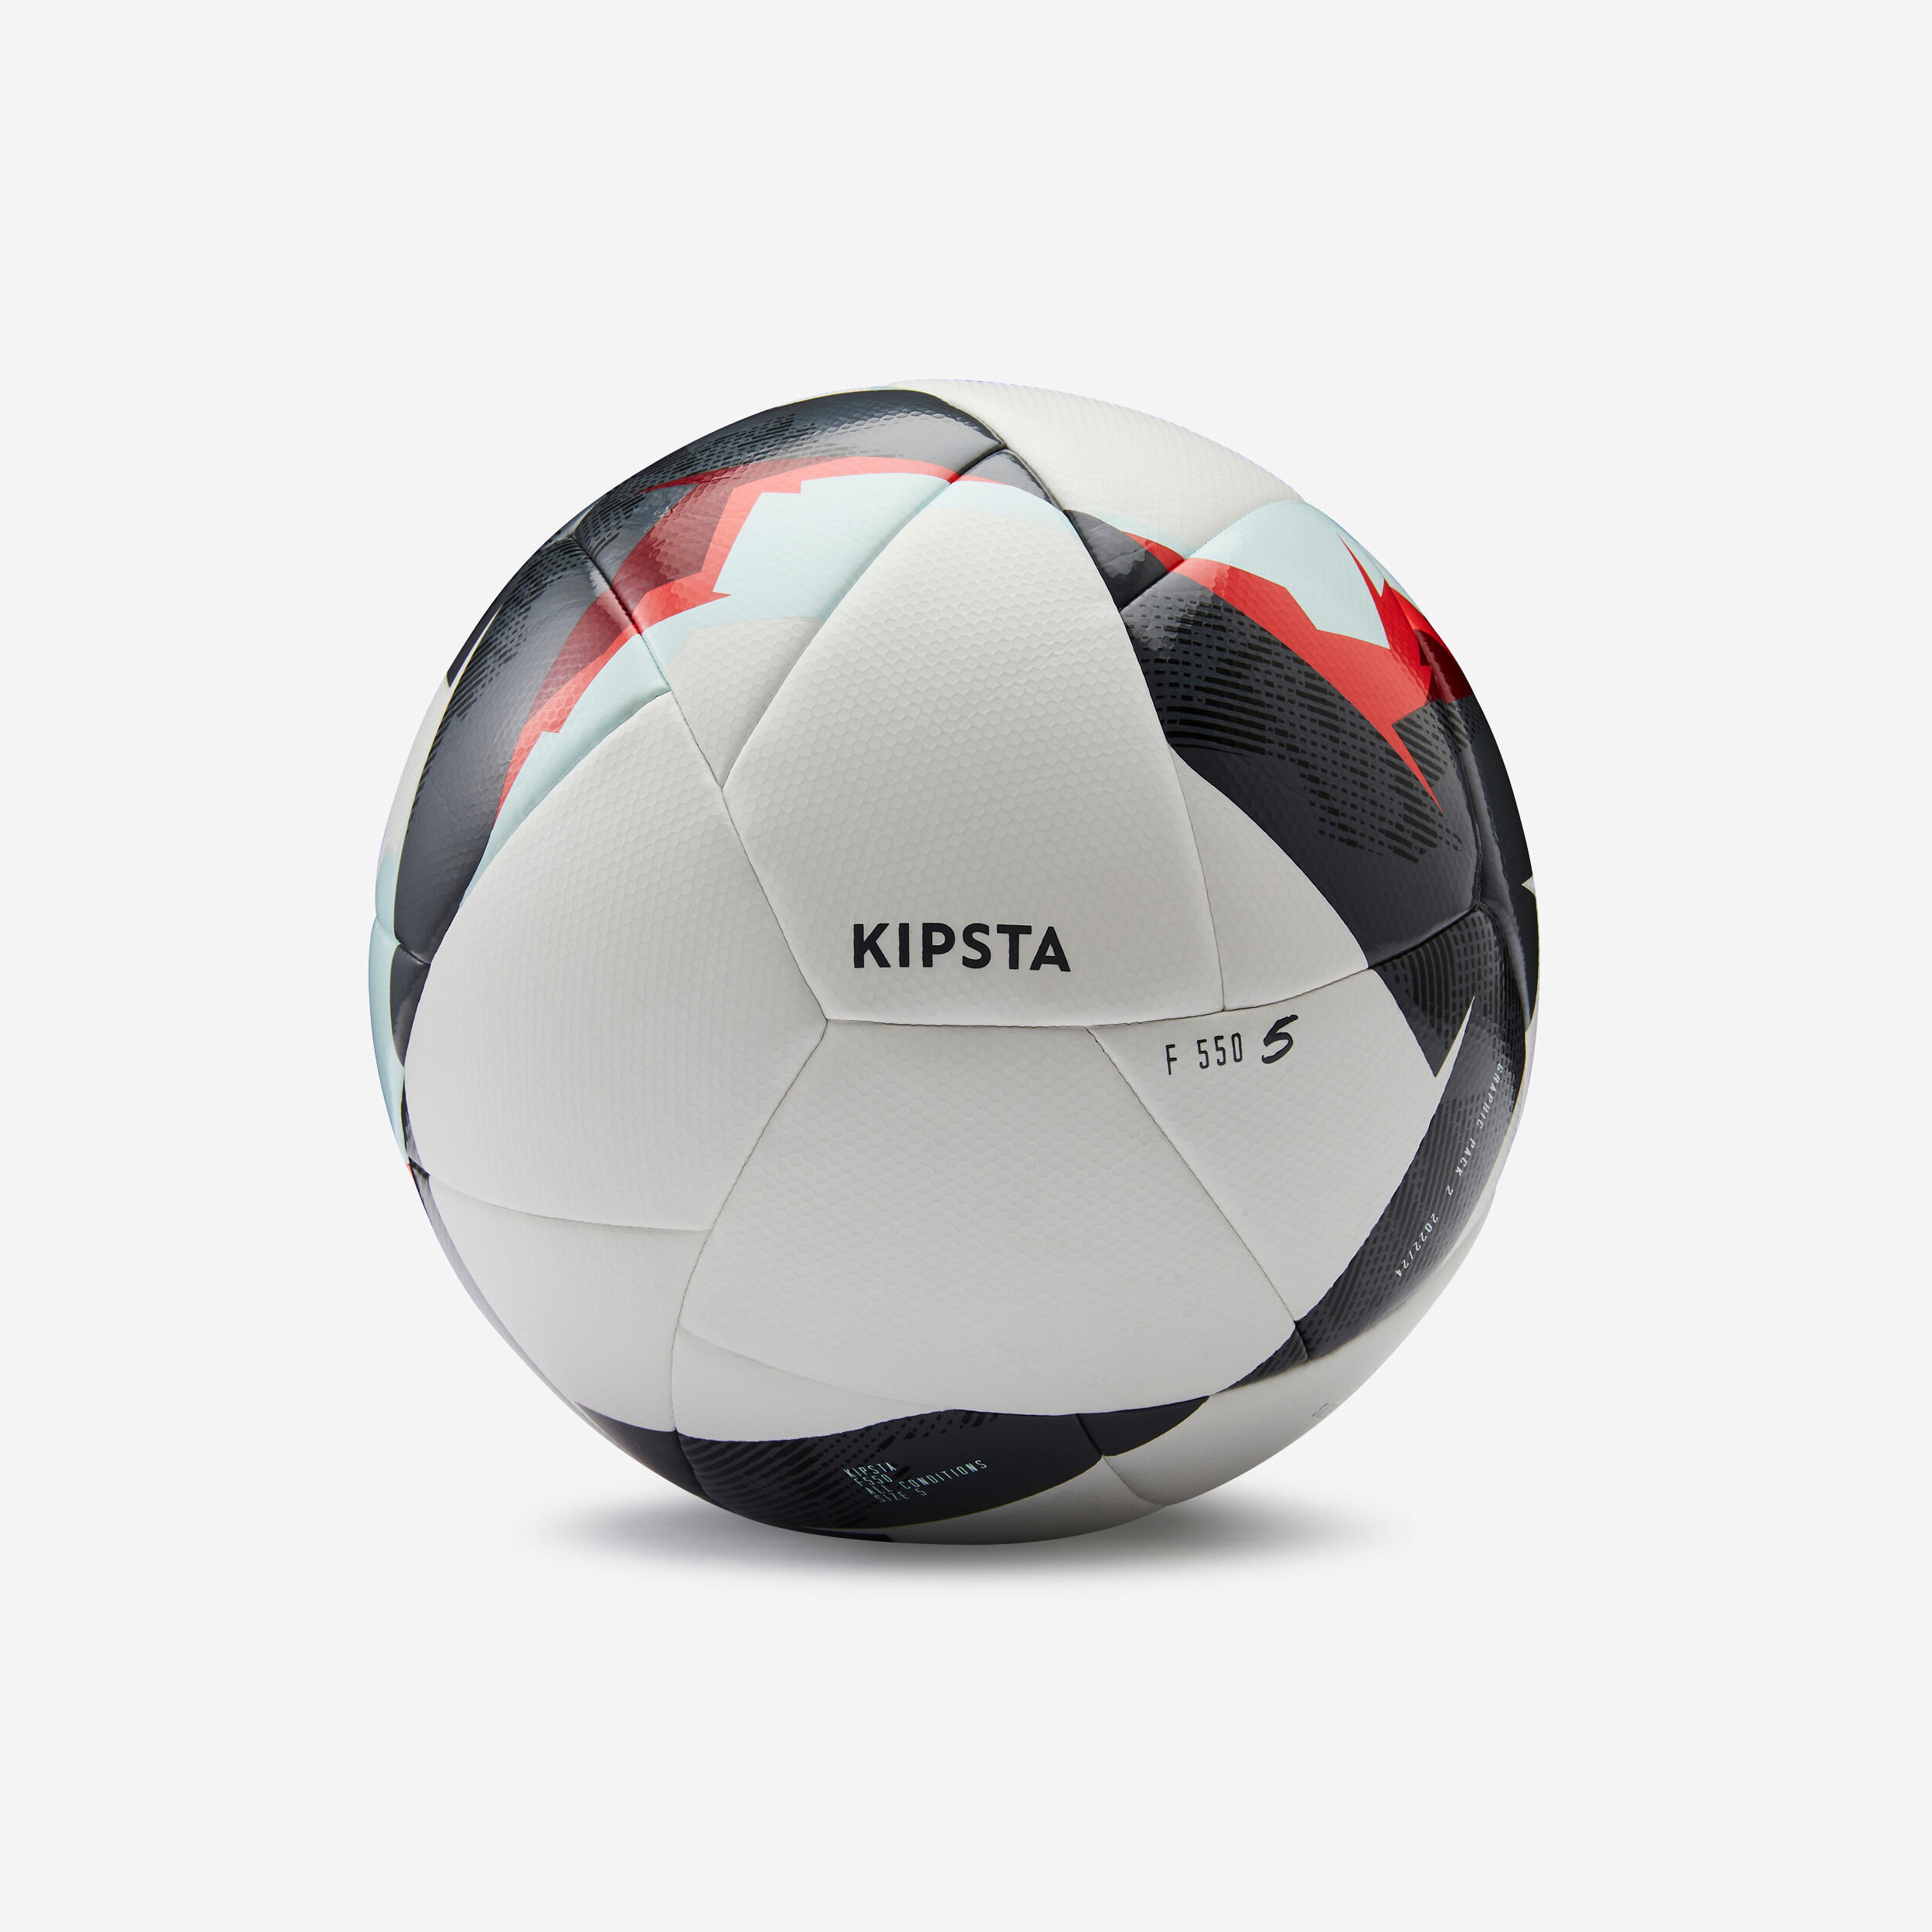 KIPSTA Hybrid Football FIFA Basic F550 Size 5 - White/Red